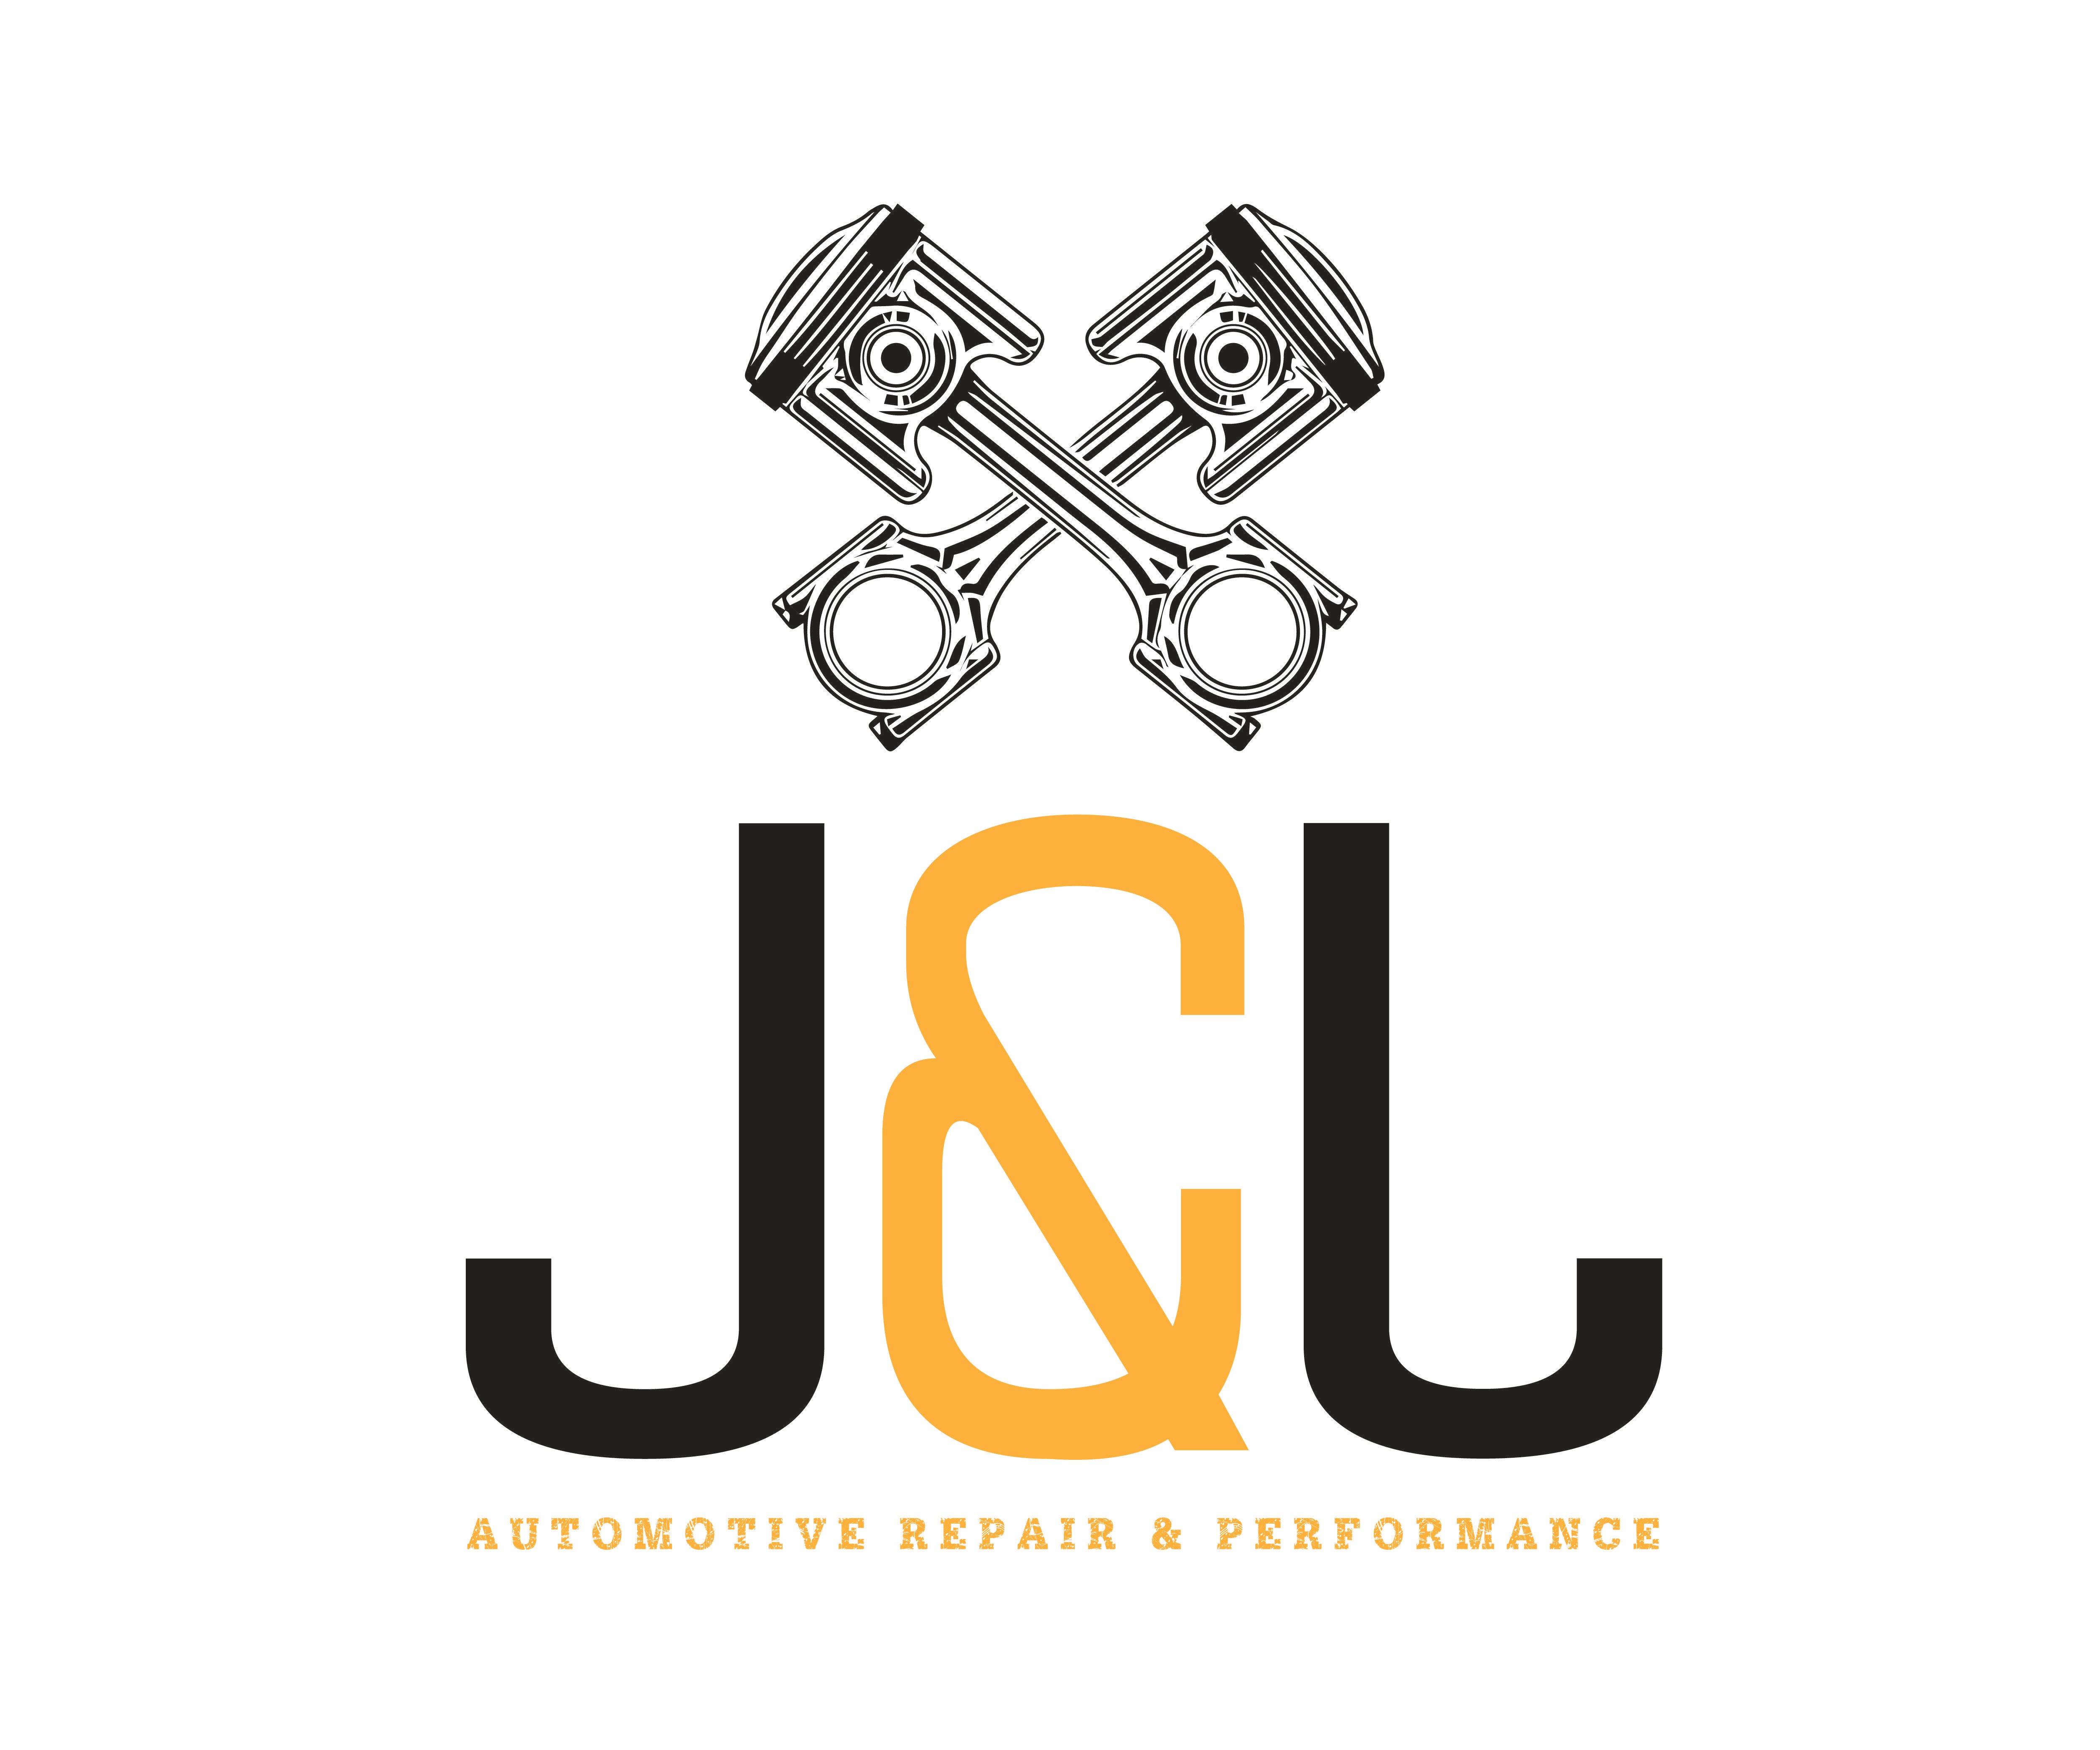 J&J Logo - Bold, Serious, Automotive Logo Design for J&J Automotive Repair